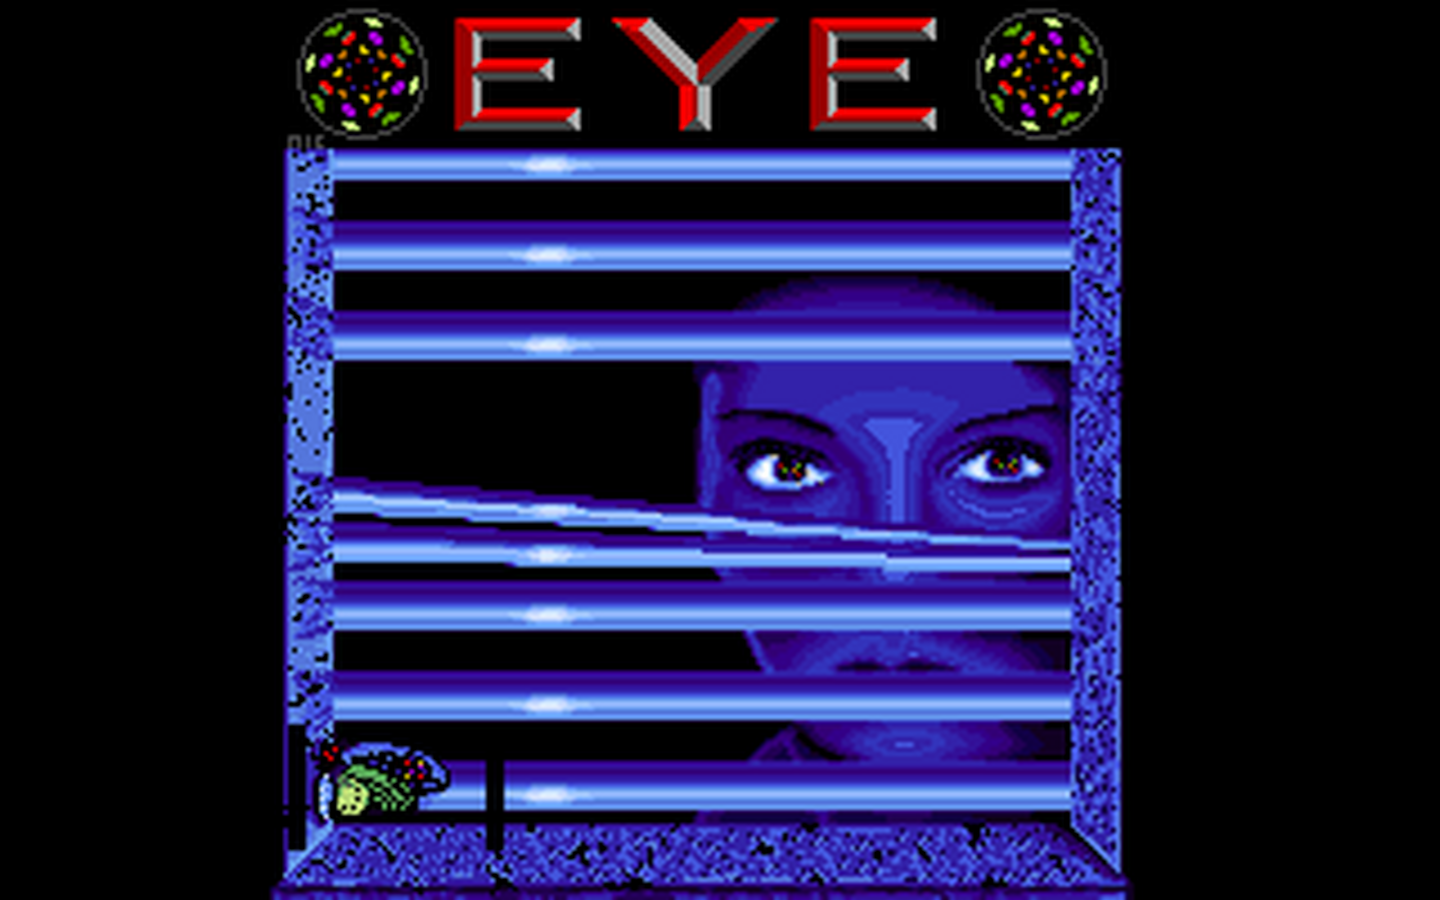 Amiga GameBase Eye Endurance 1988